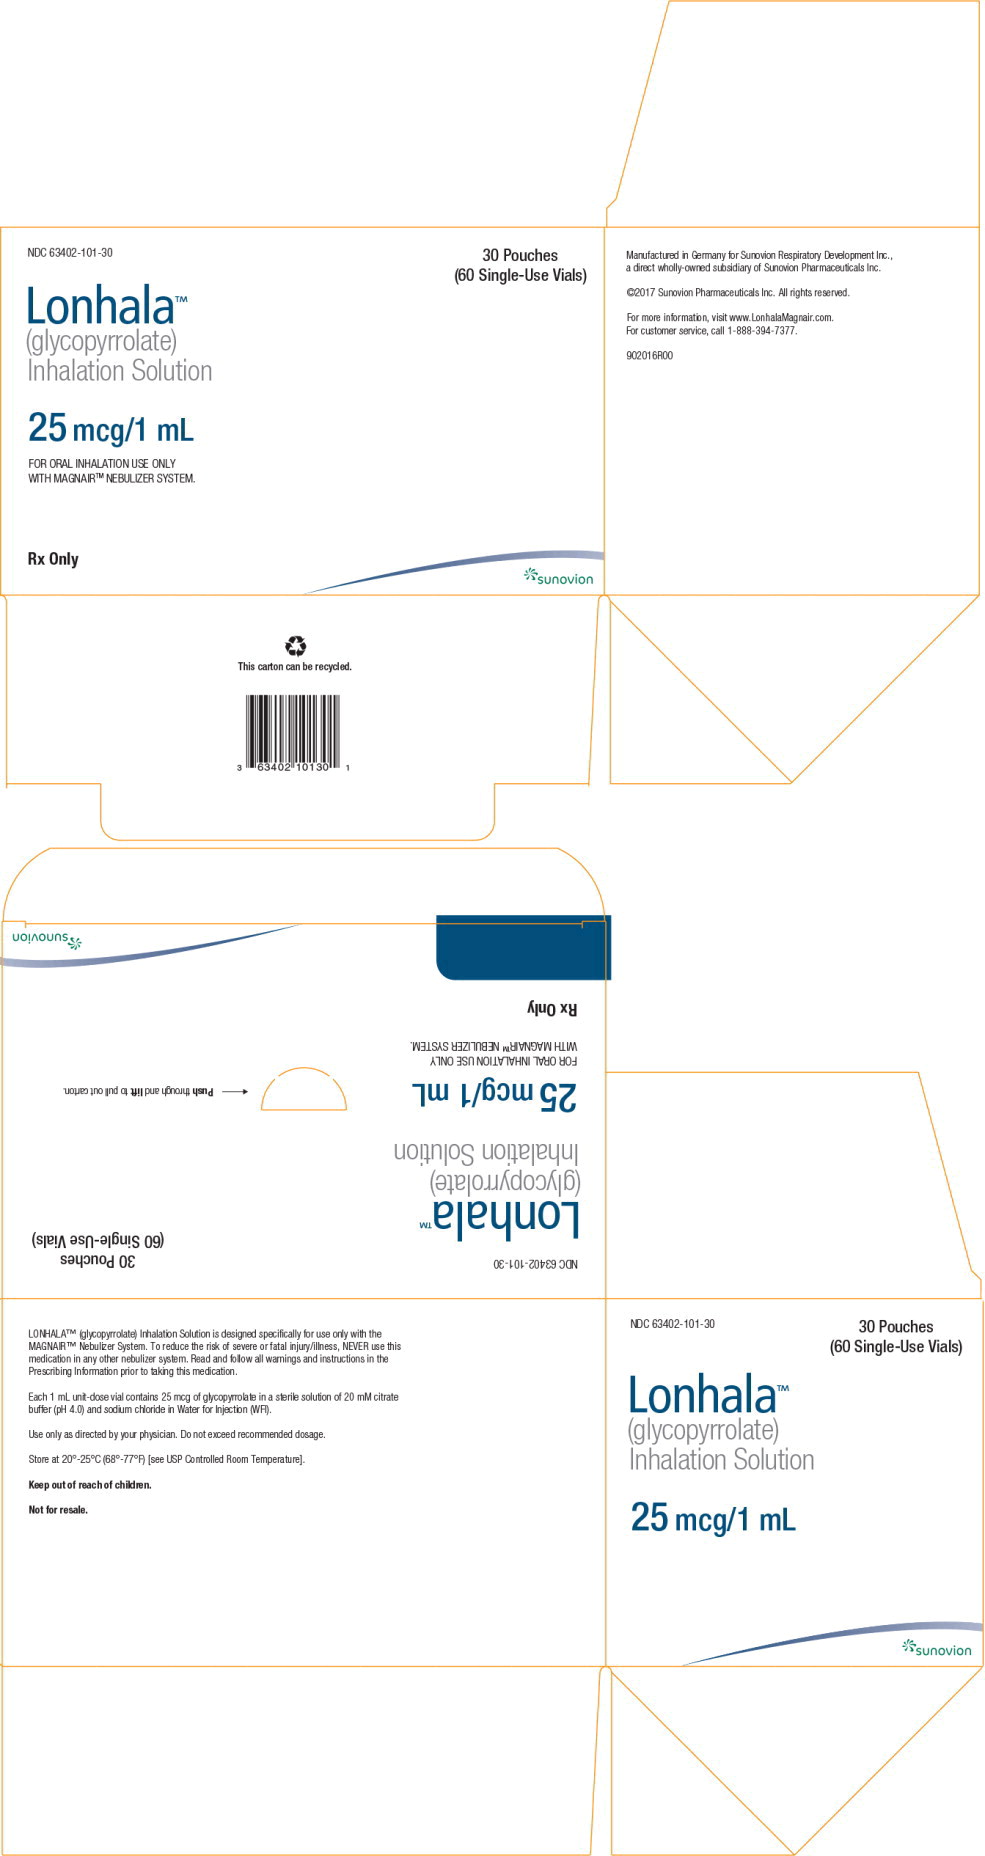 PRINCIPAL DISPLAY PANEL – Product Carton - 60 vial carton
